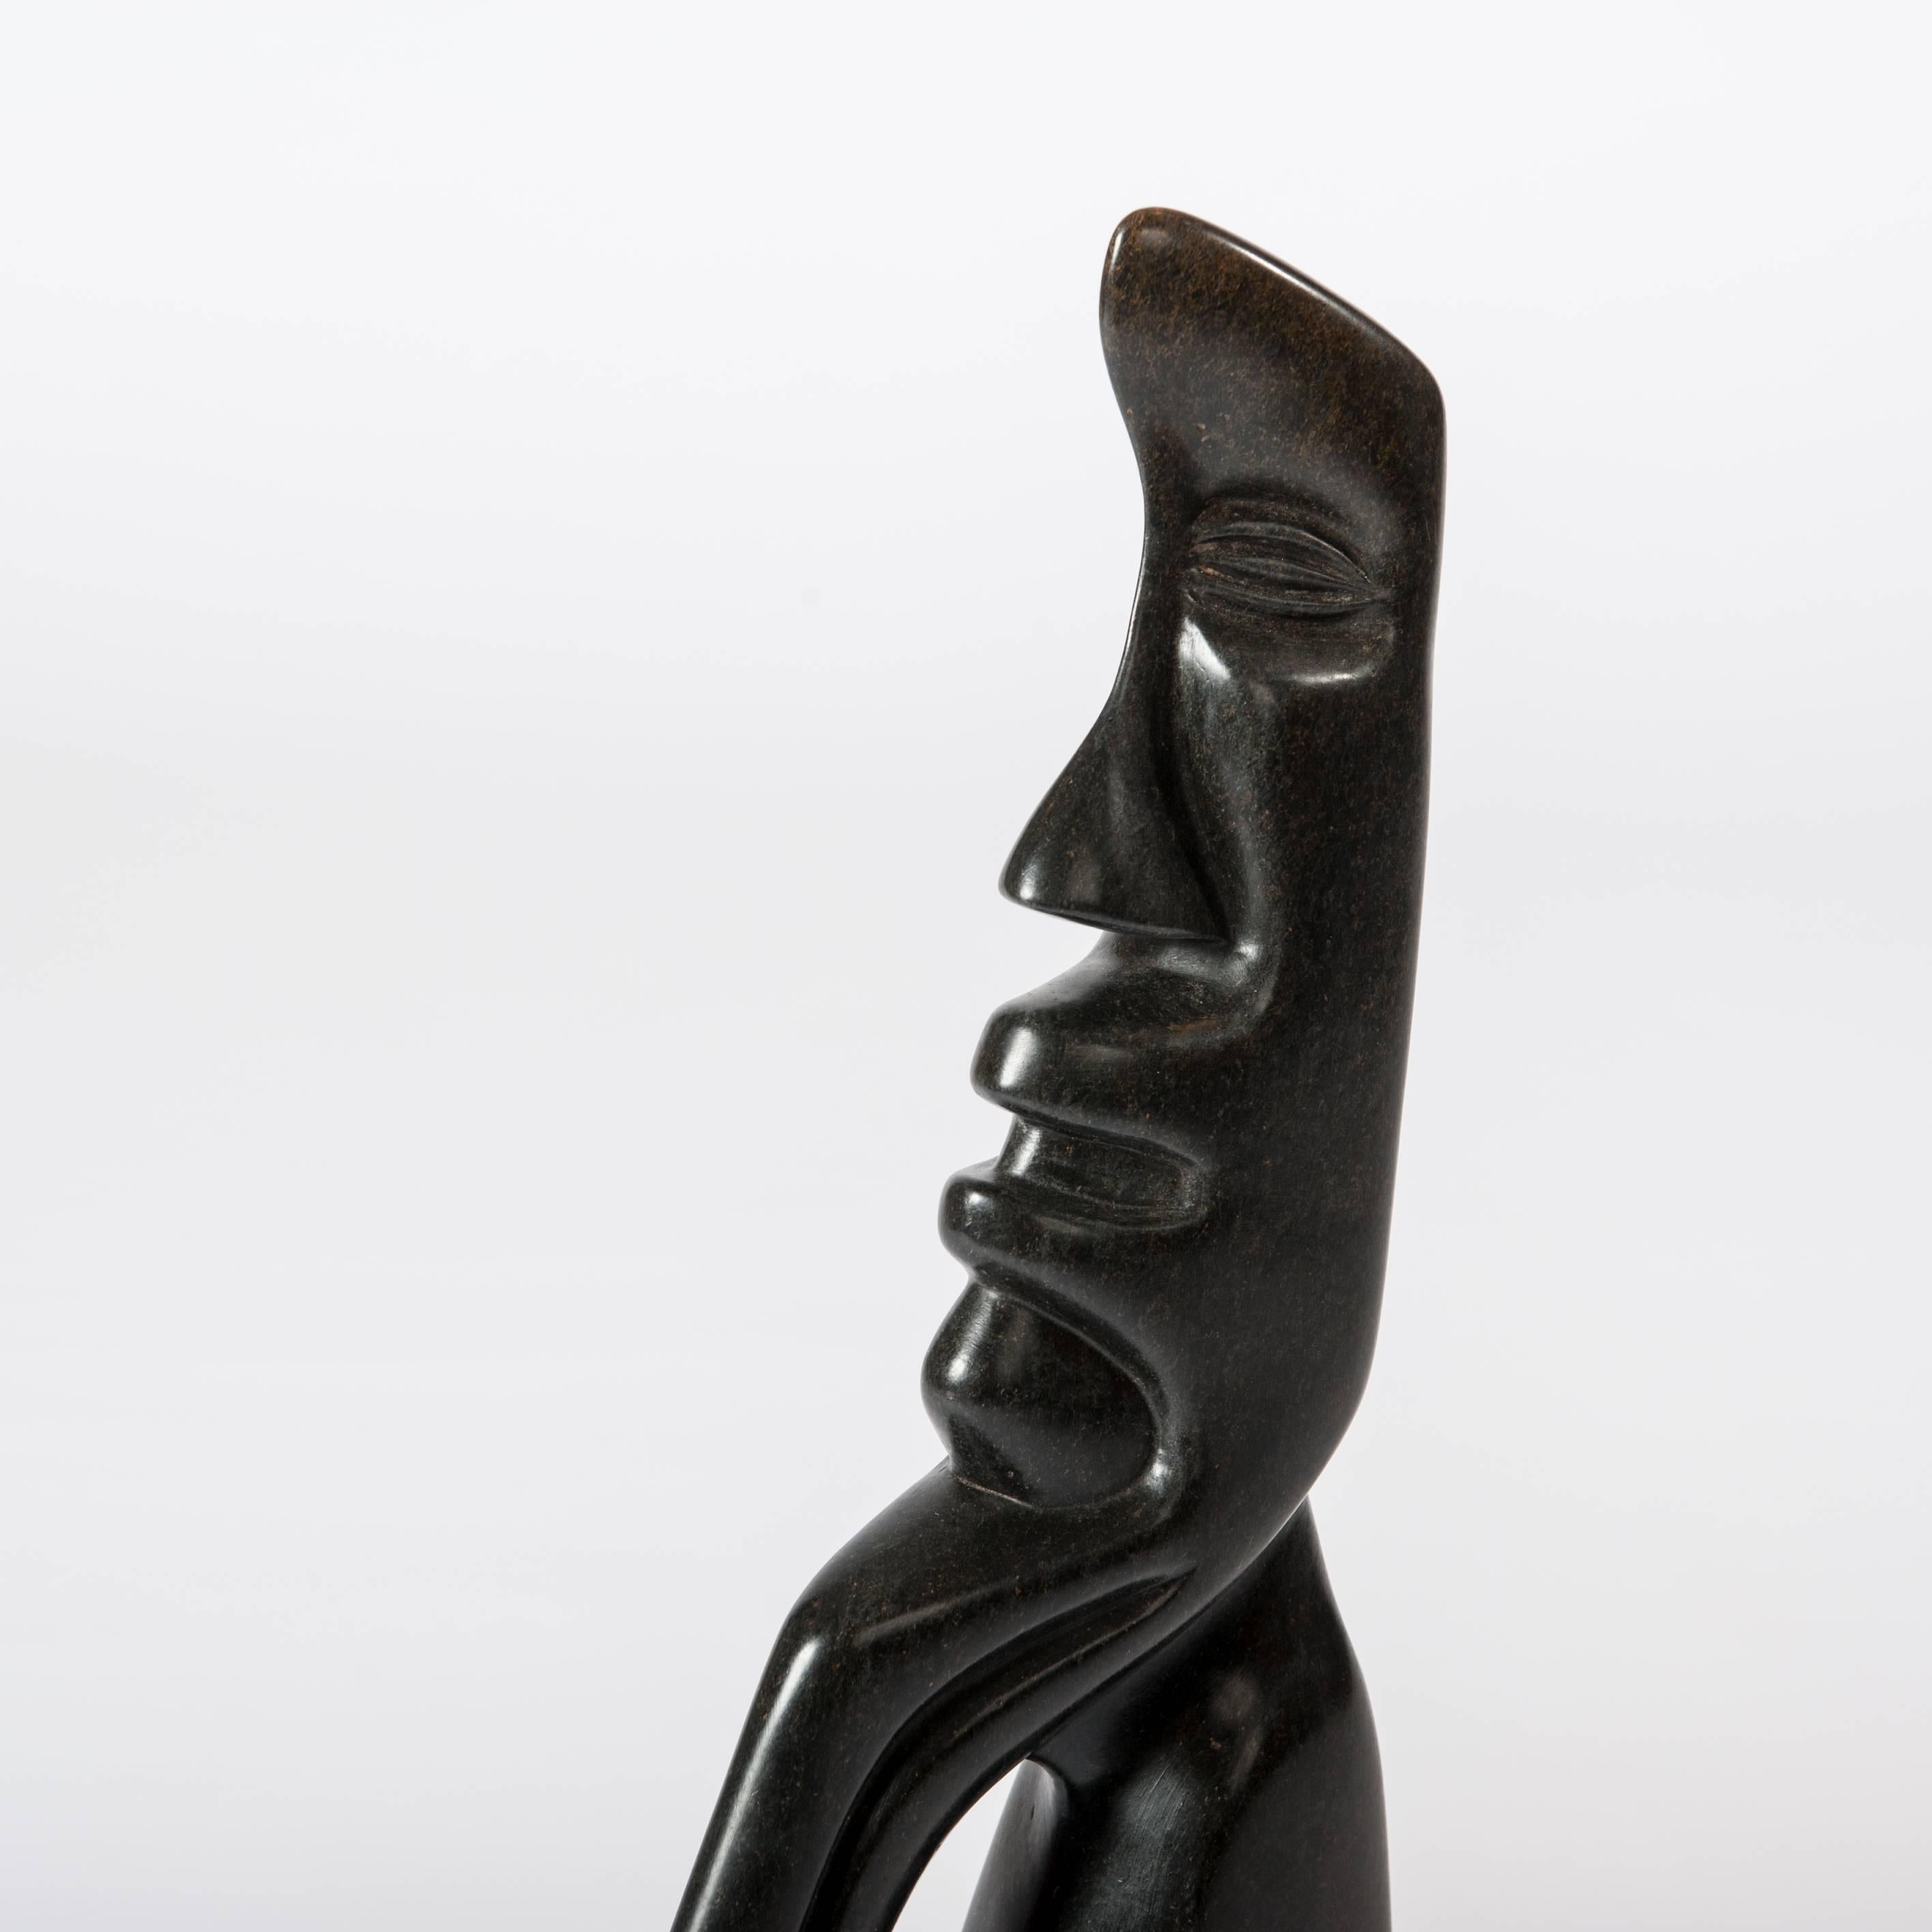 Cubistic shaped African figural black springstone sculpture by Bauden Khoreay on acryl socket.
Measurements sculpture: 37cm x 5.6cm x 52.5cm
Measurement acryl base: 30cm x 10cm x 2.5cm

Biography:
Born in 1948 in Cholo, Malawi.
Alongside